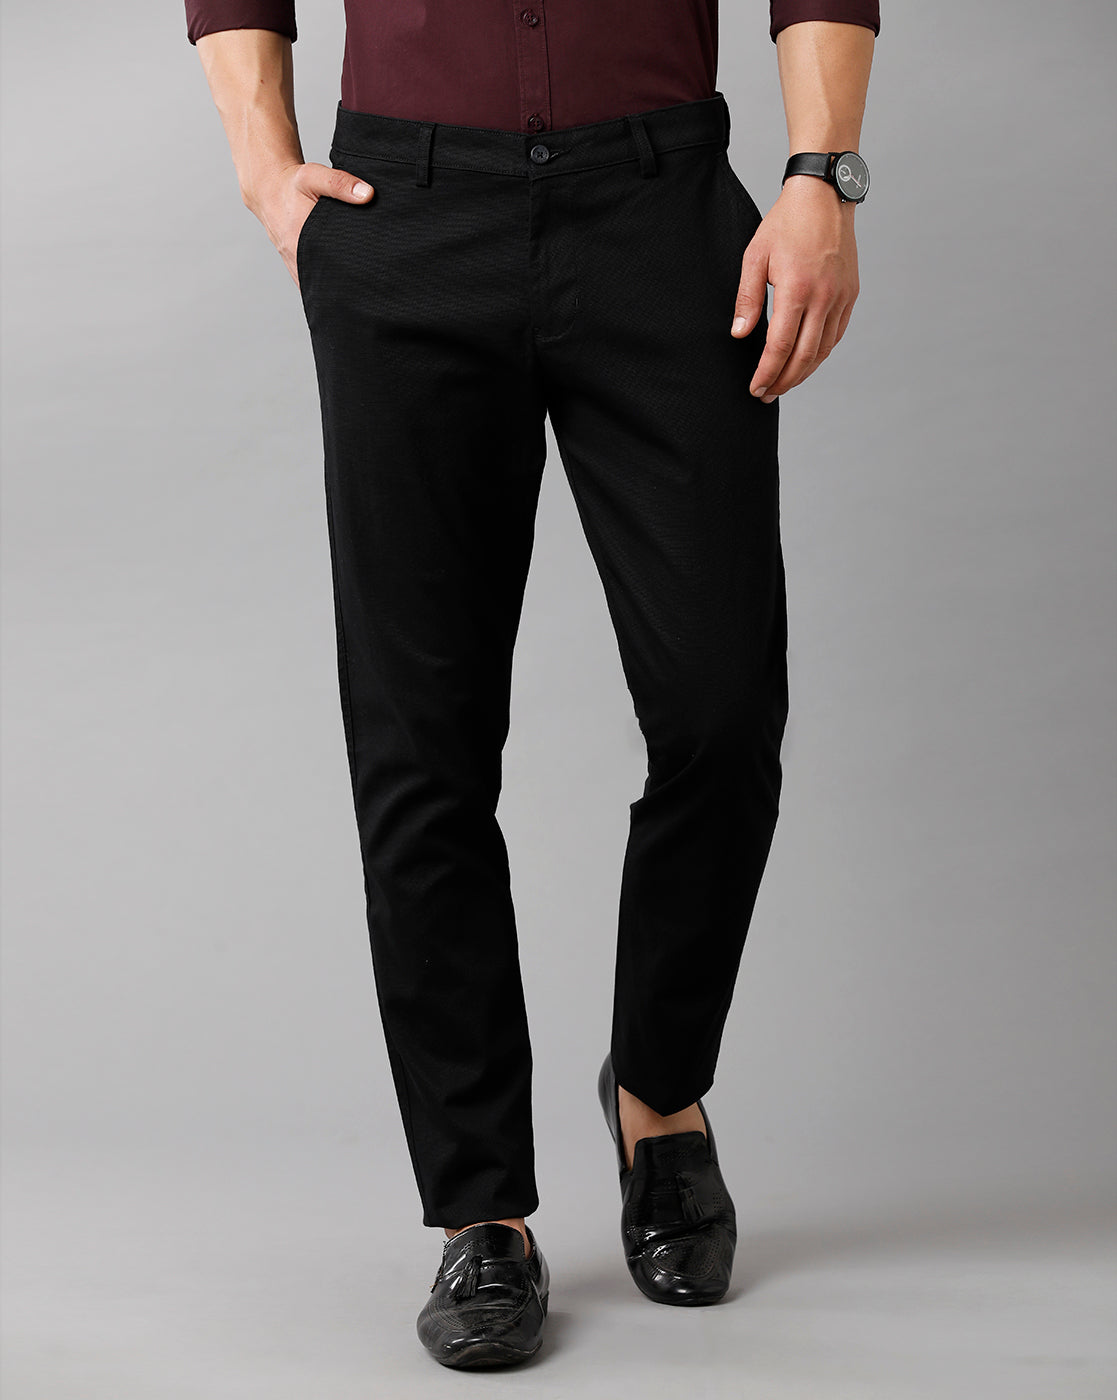 Classic Polo Mens Cotton Solid Slim Fit Black Color Trouser | Tn2 29 Eblk